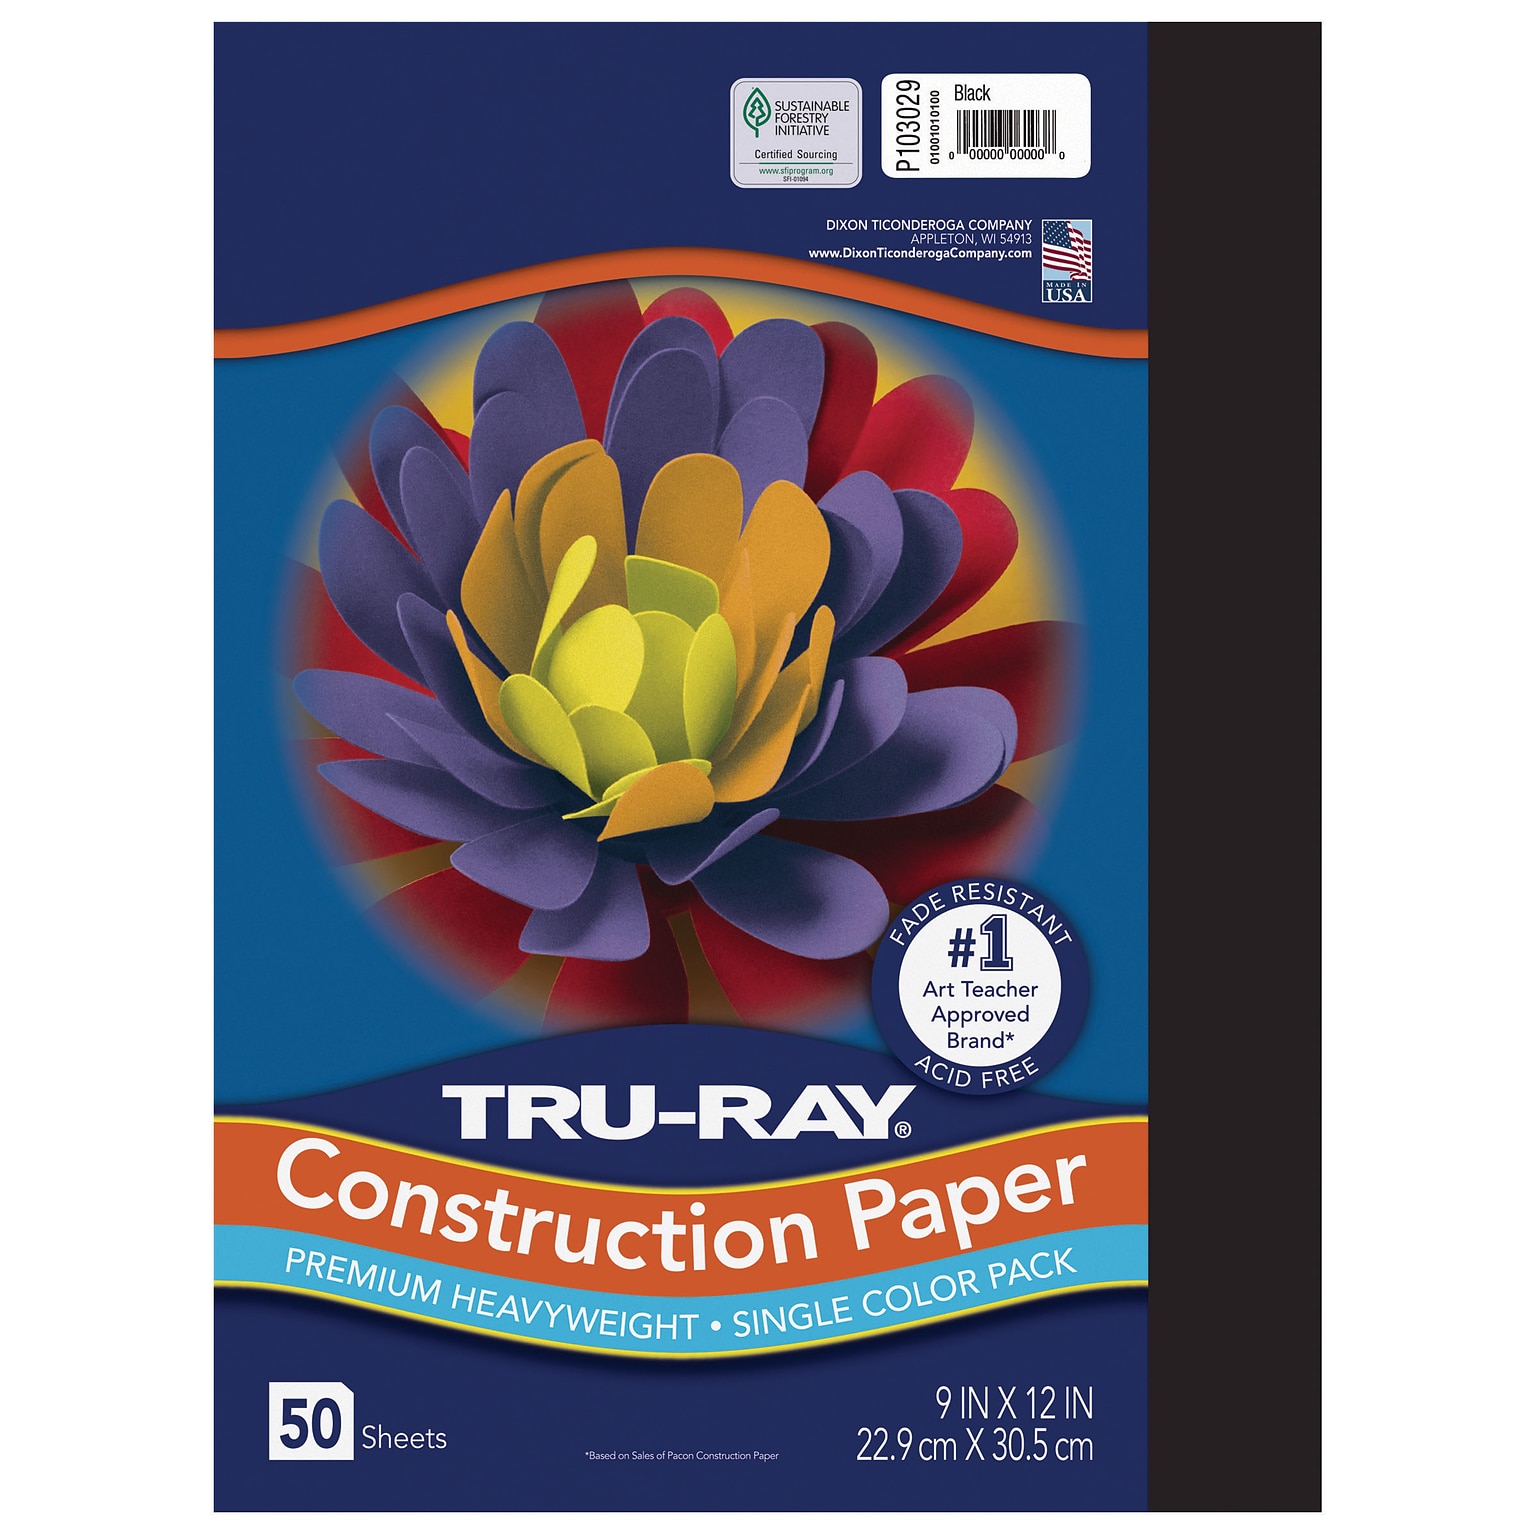 Tru-Ray 9 x 12 Construction Paper, Black, 50 Sheets (P103029)